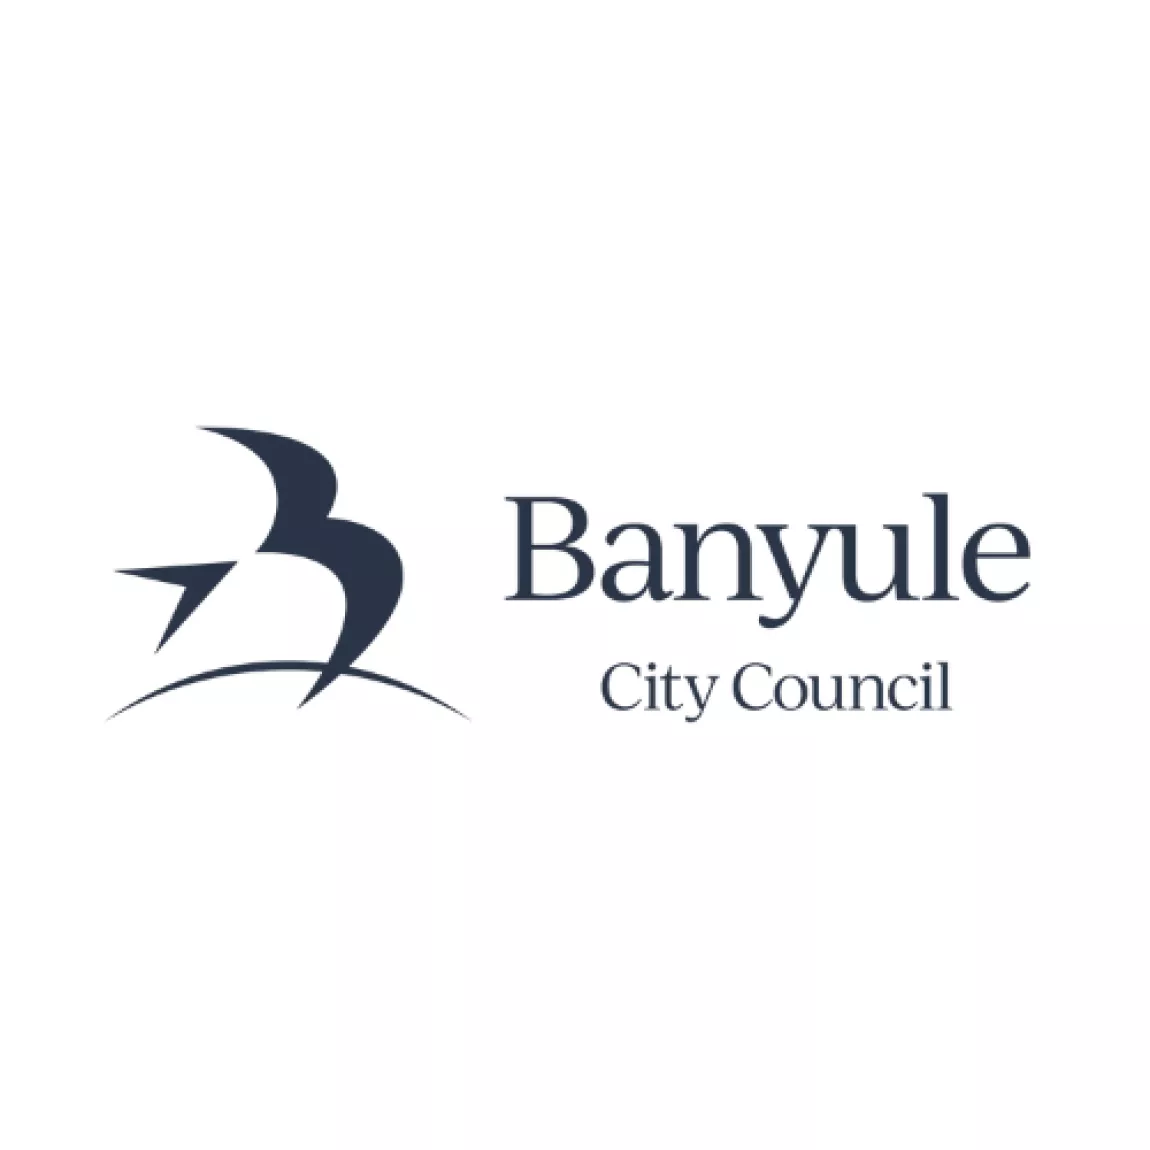 Banyule City Council Logo